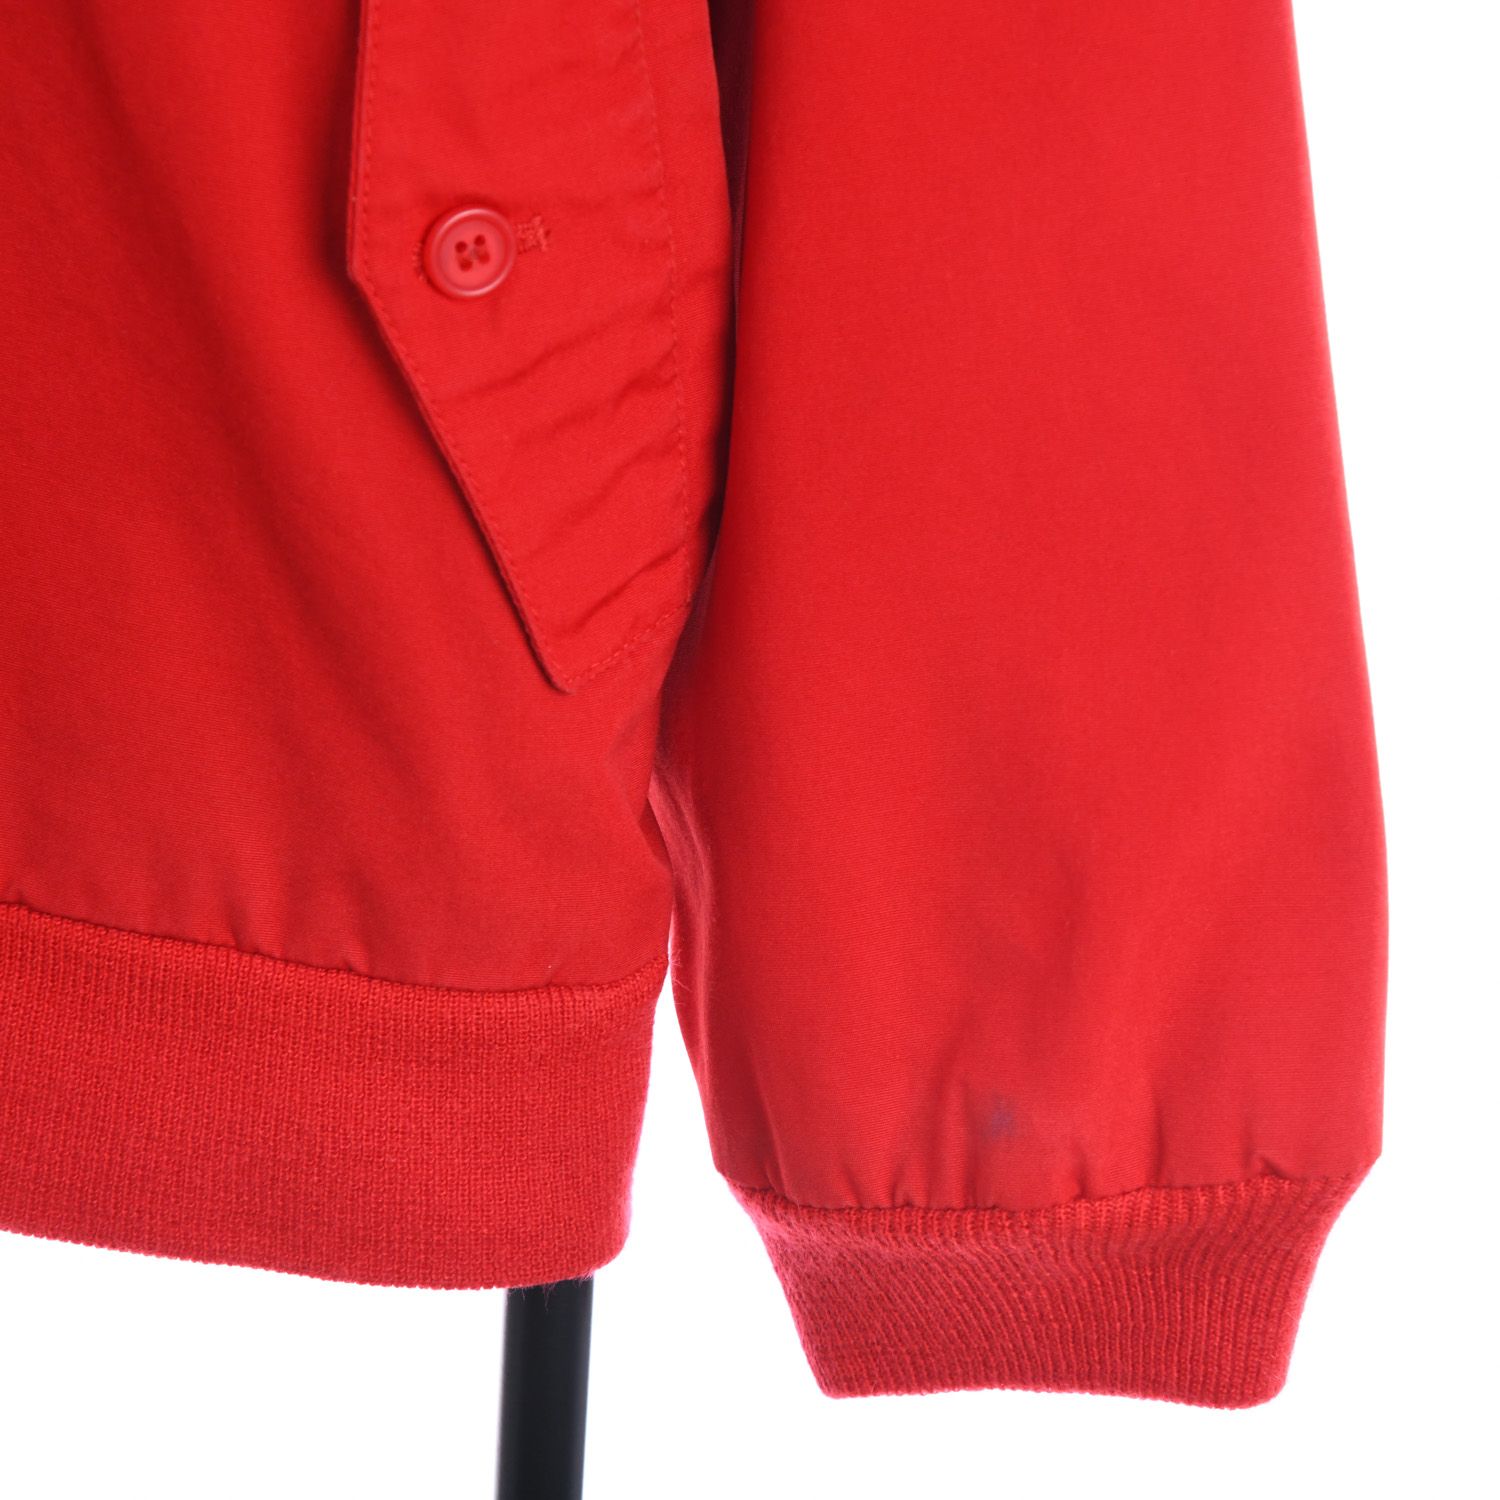 Lacoste IZOD 1980s Harrington Red Jacket